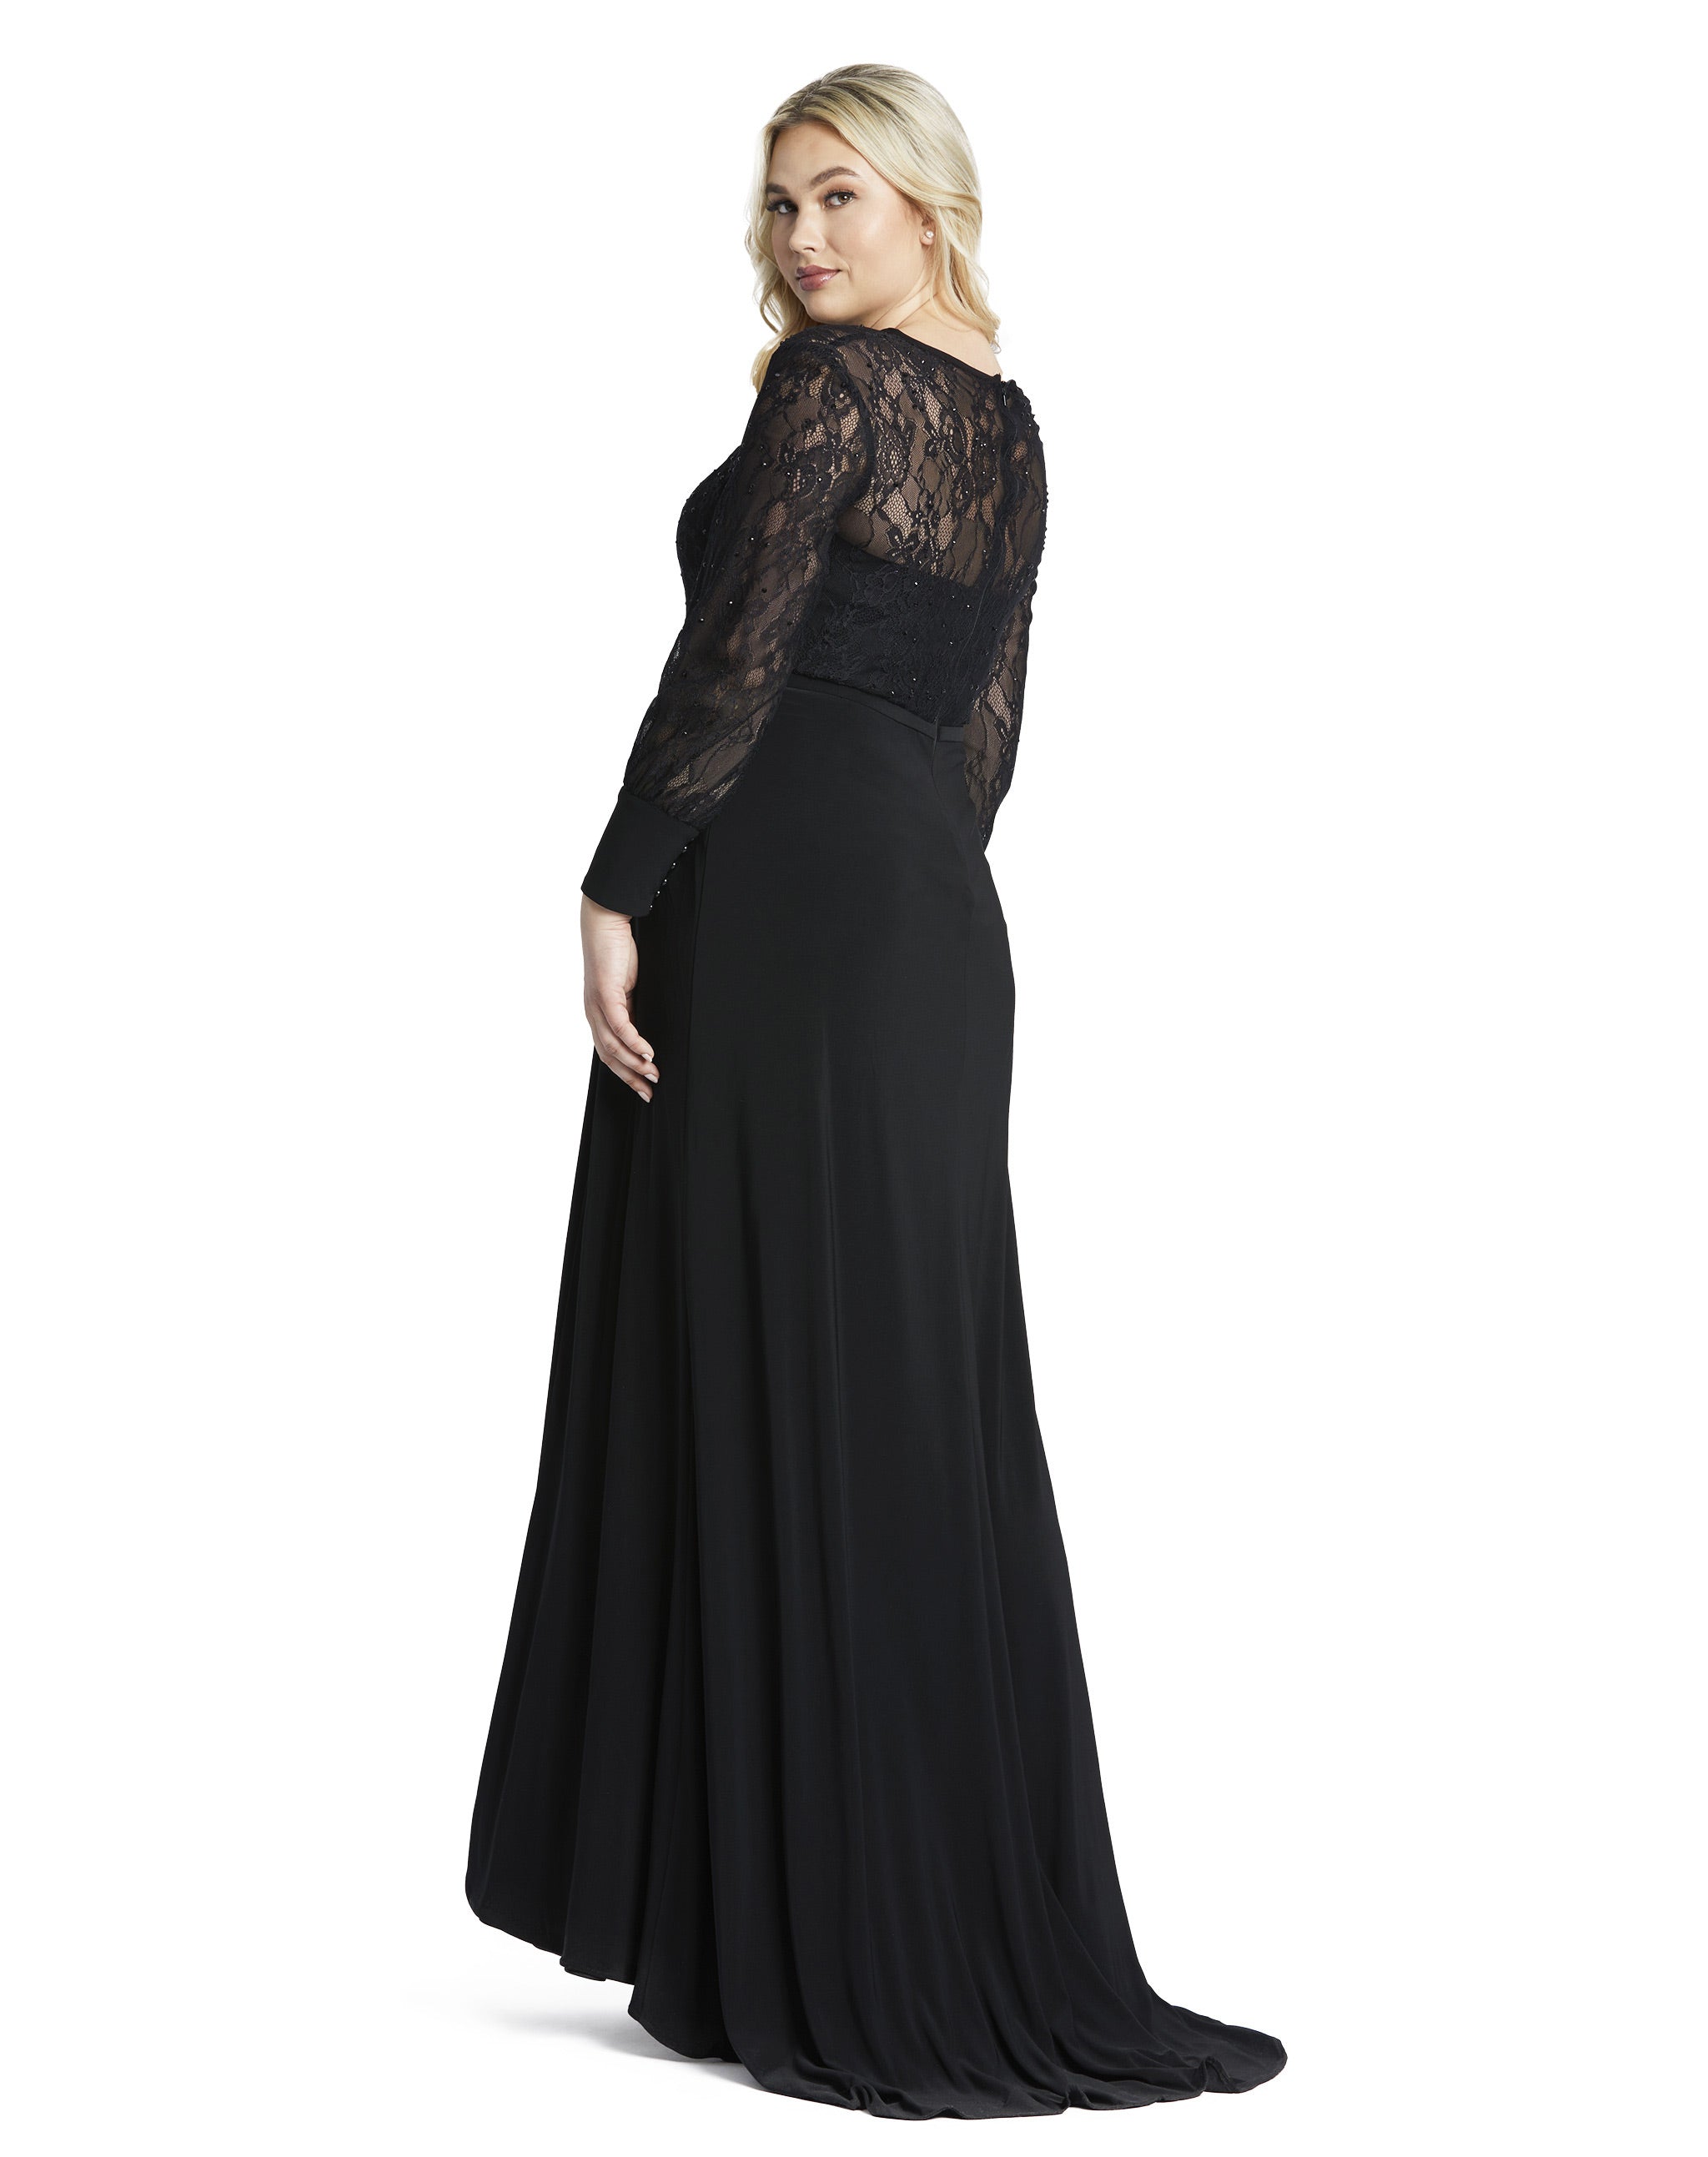 Sequin Lace Black Evening Gown